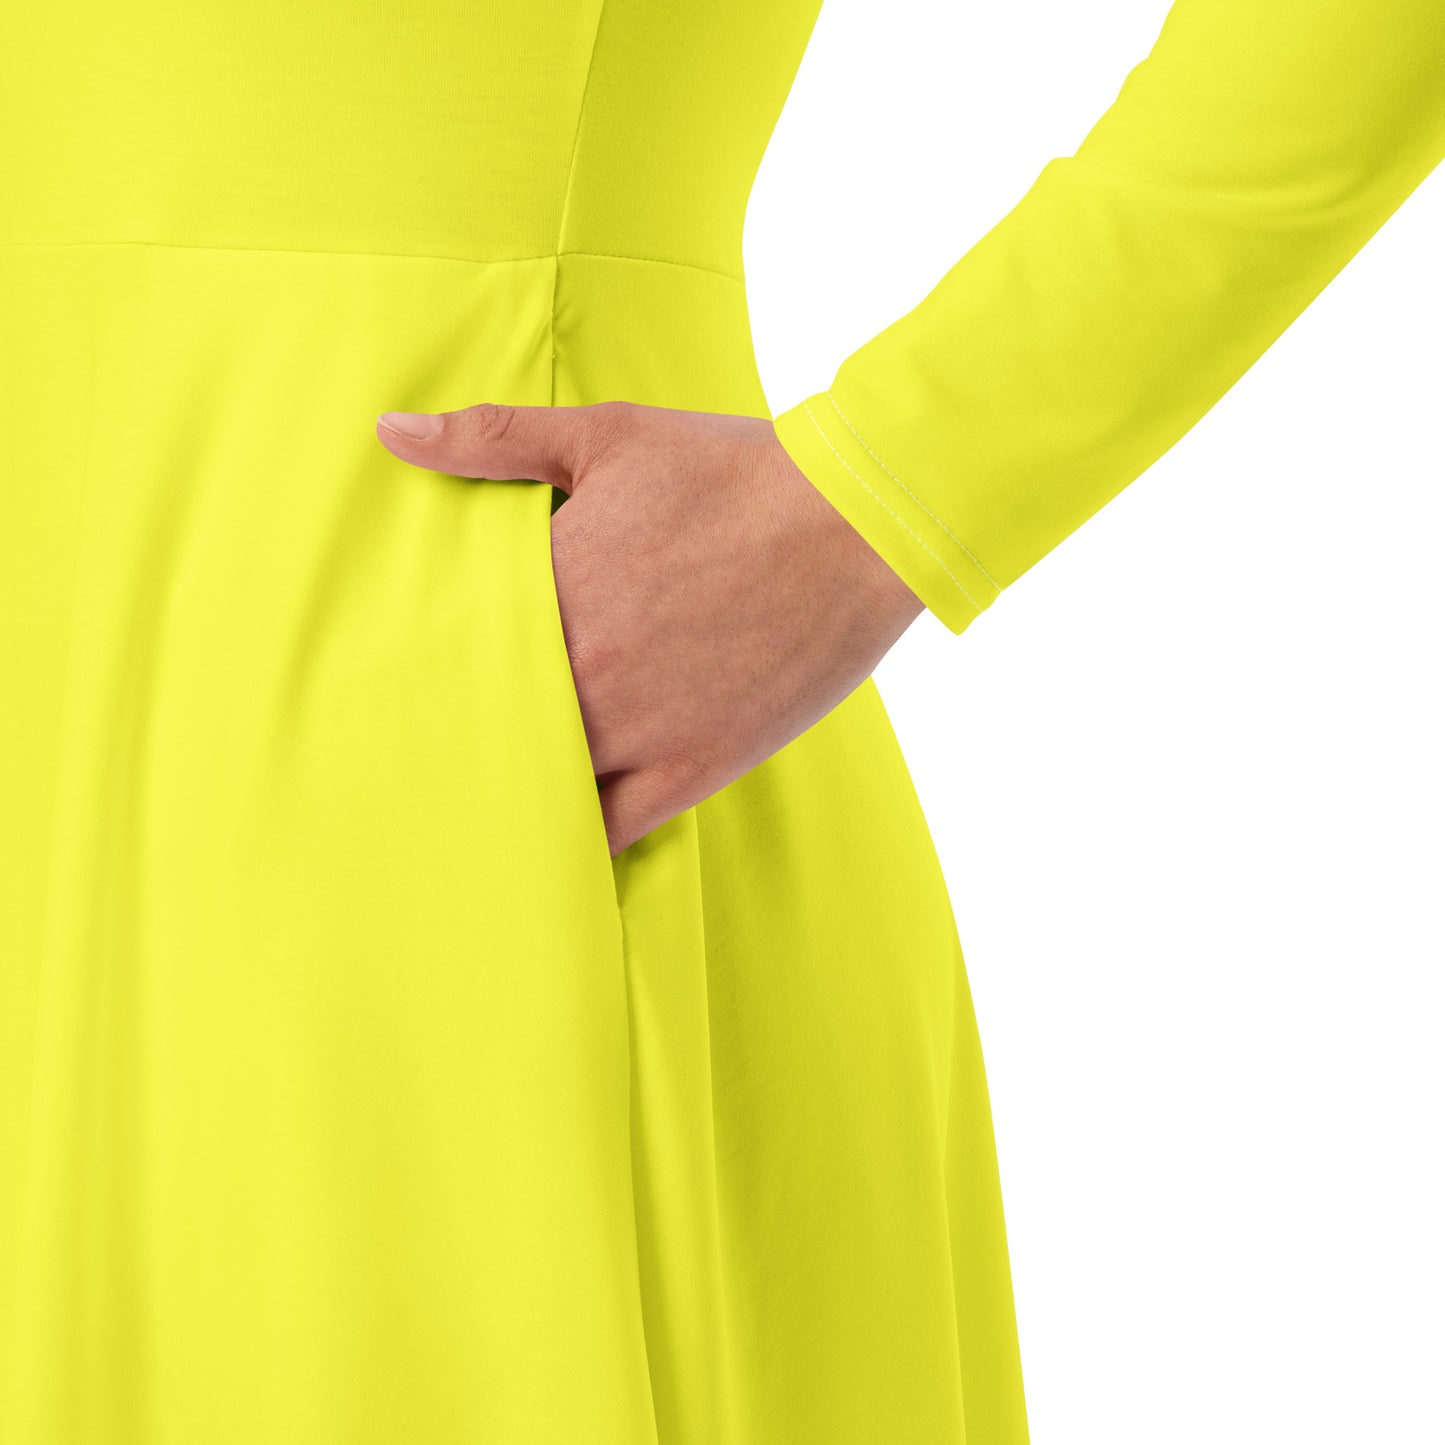 Yellow Long Sleeve Midi Dress